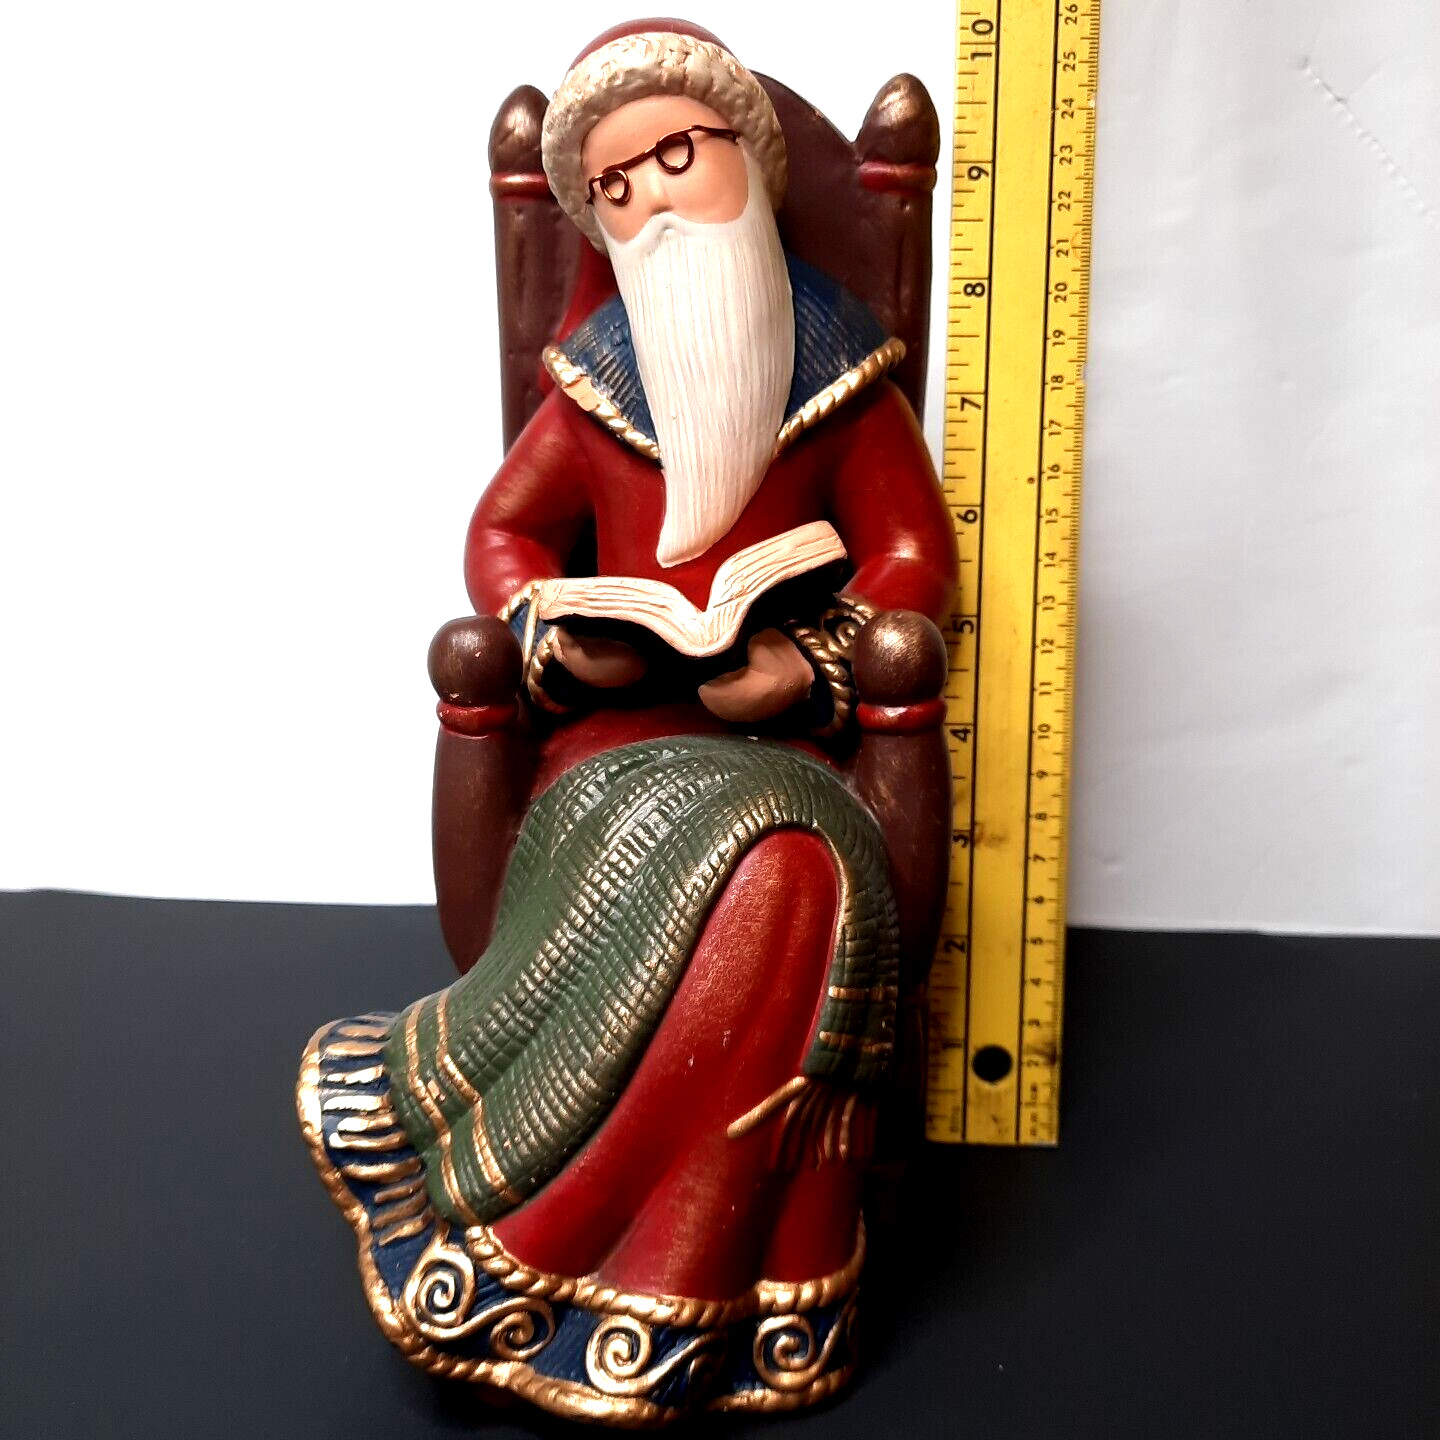 Christmas Tidings of Inspiration Ceramic Santa 80180 by Mind Spring 2002 